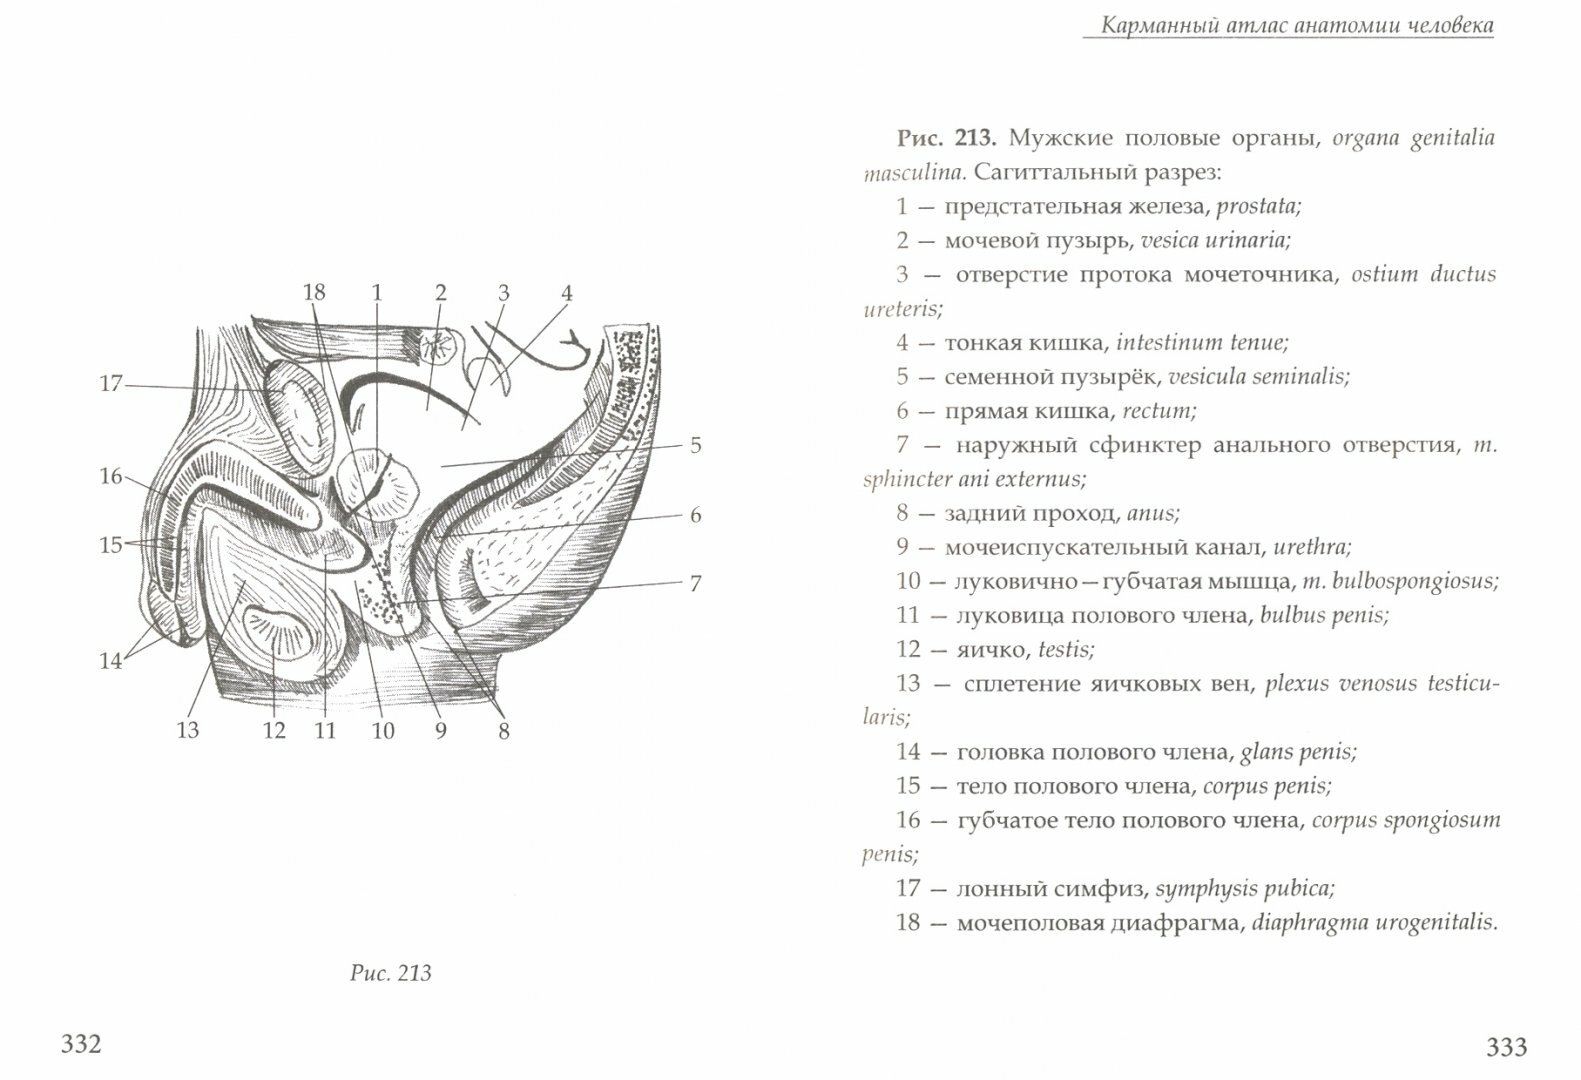 Карманный атлас анатомии человека - фото №2